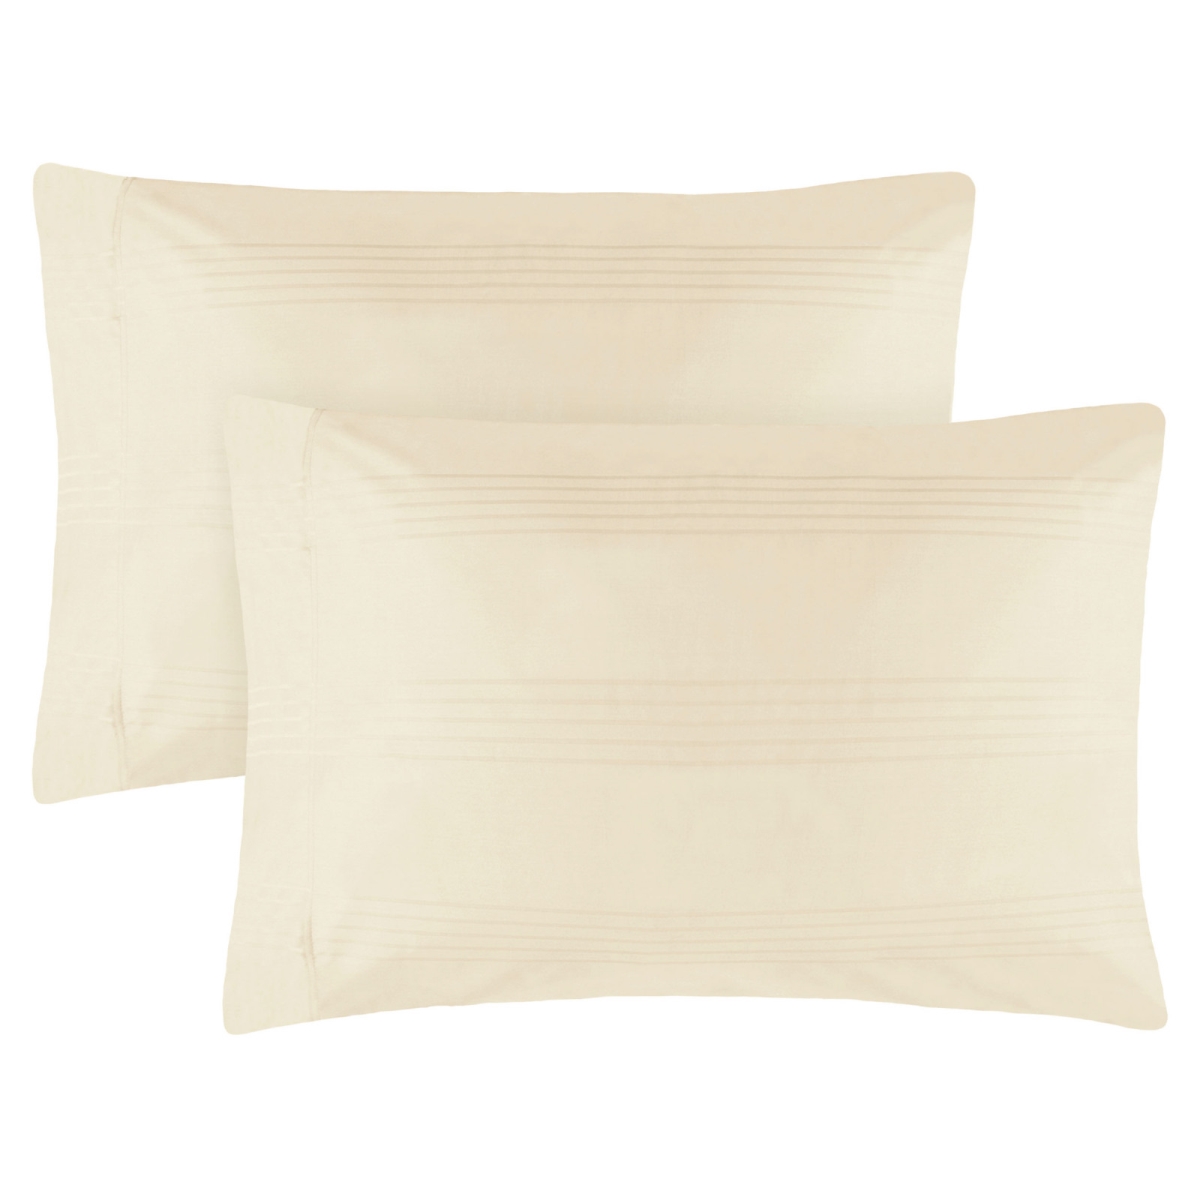 Yms008218 Premium 420 Thread Count 100 Percent Cotton Pillowcase Set, Ivory - Standard - 2 Piece